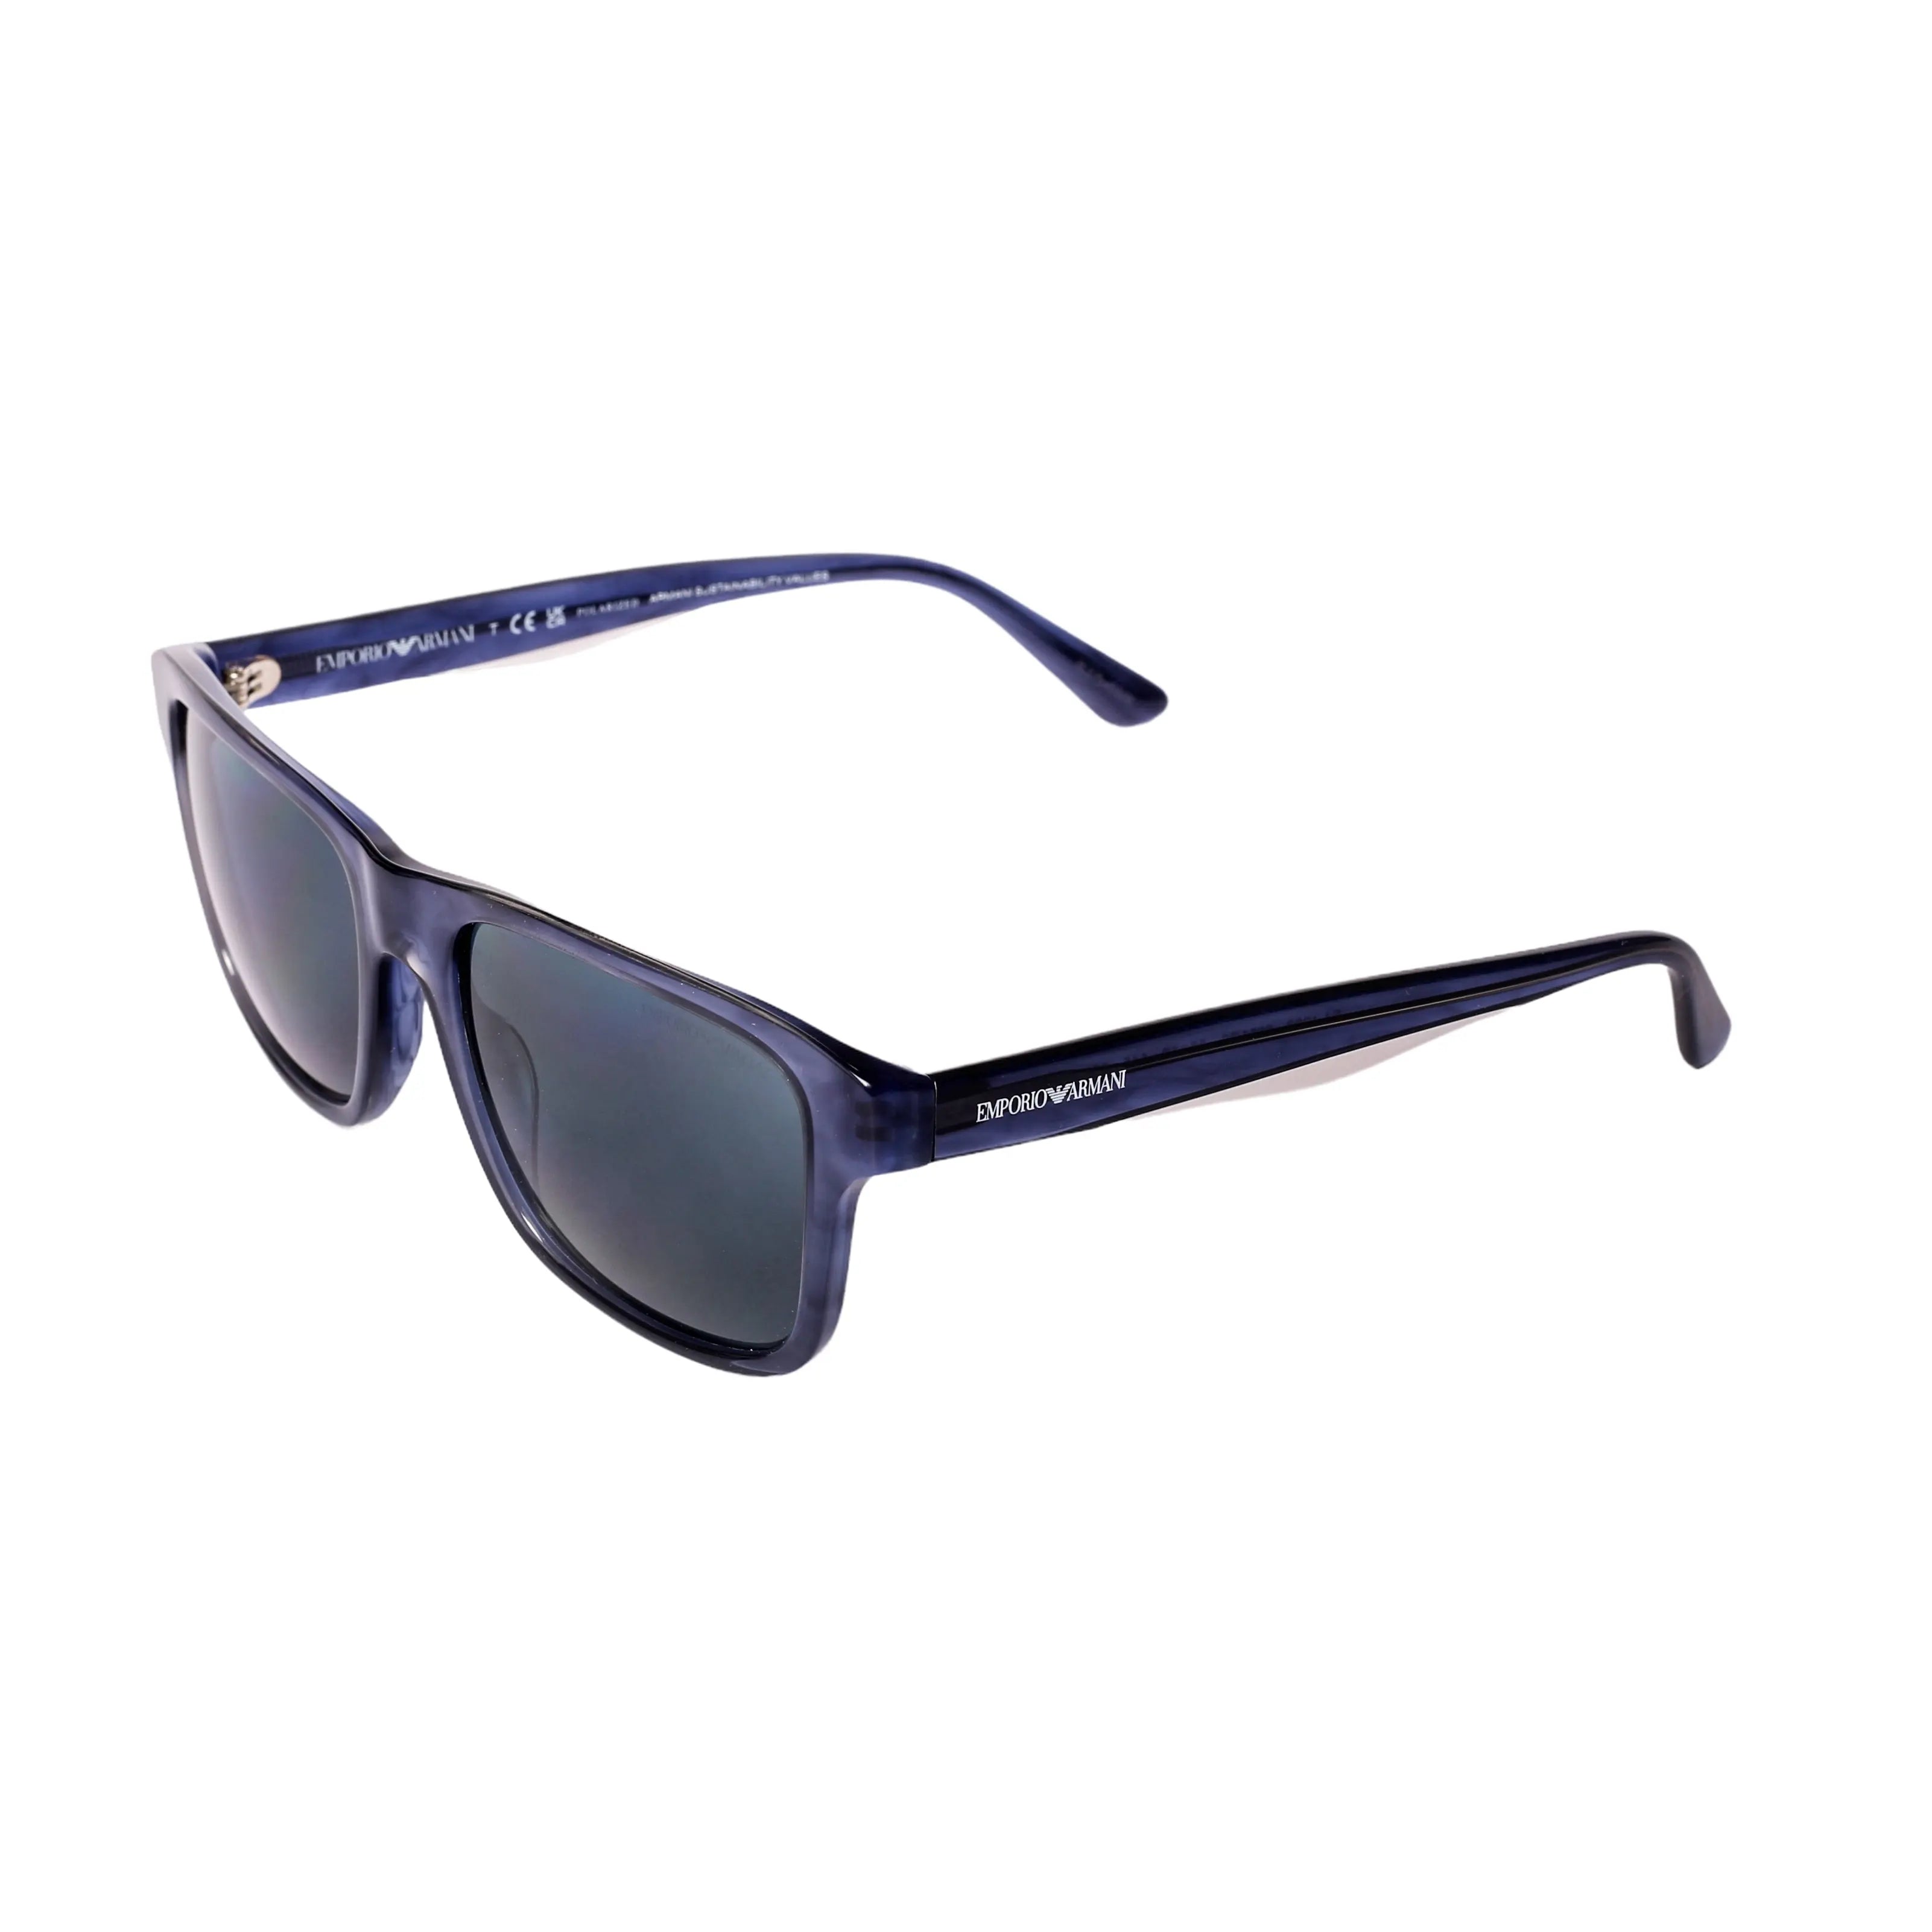 Emporio Armani-EA 4208-56-6054 Sunglasses - Premium Sunglasses from Emporio Armani - Just Rs. 15290! Shop now at Laxmi Opticians